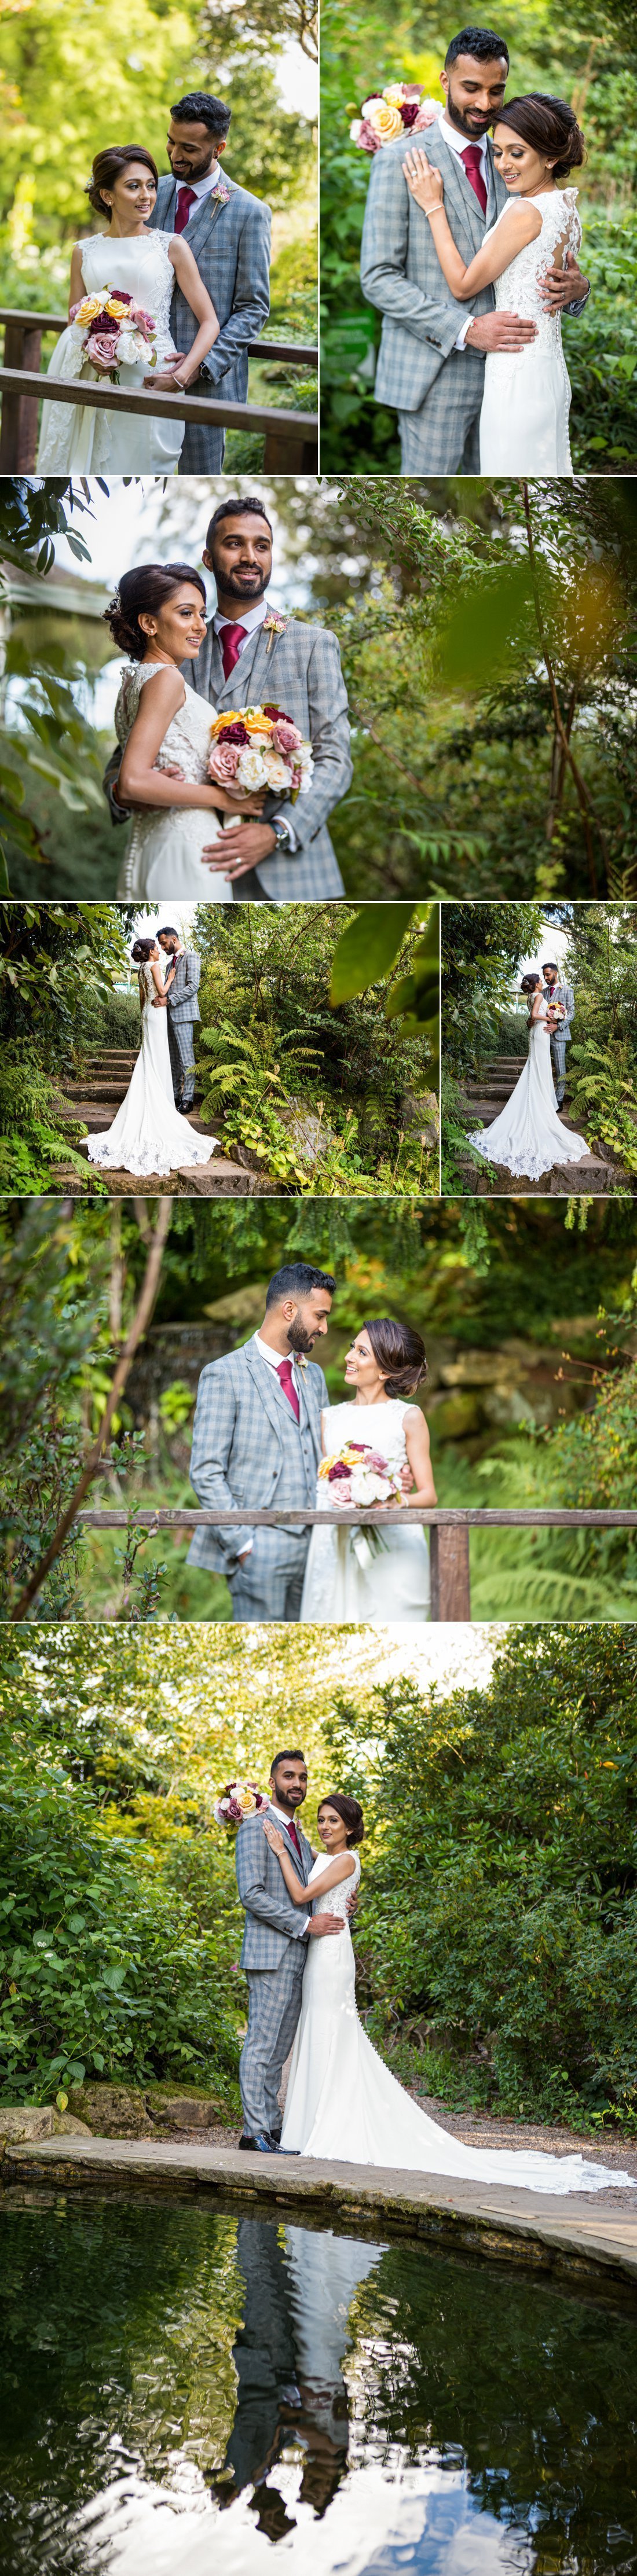 Civil wedding photography at Botannical Gardens 7 1